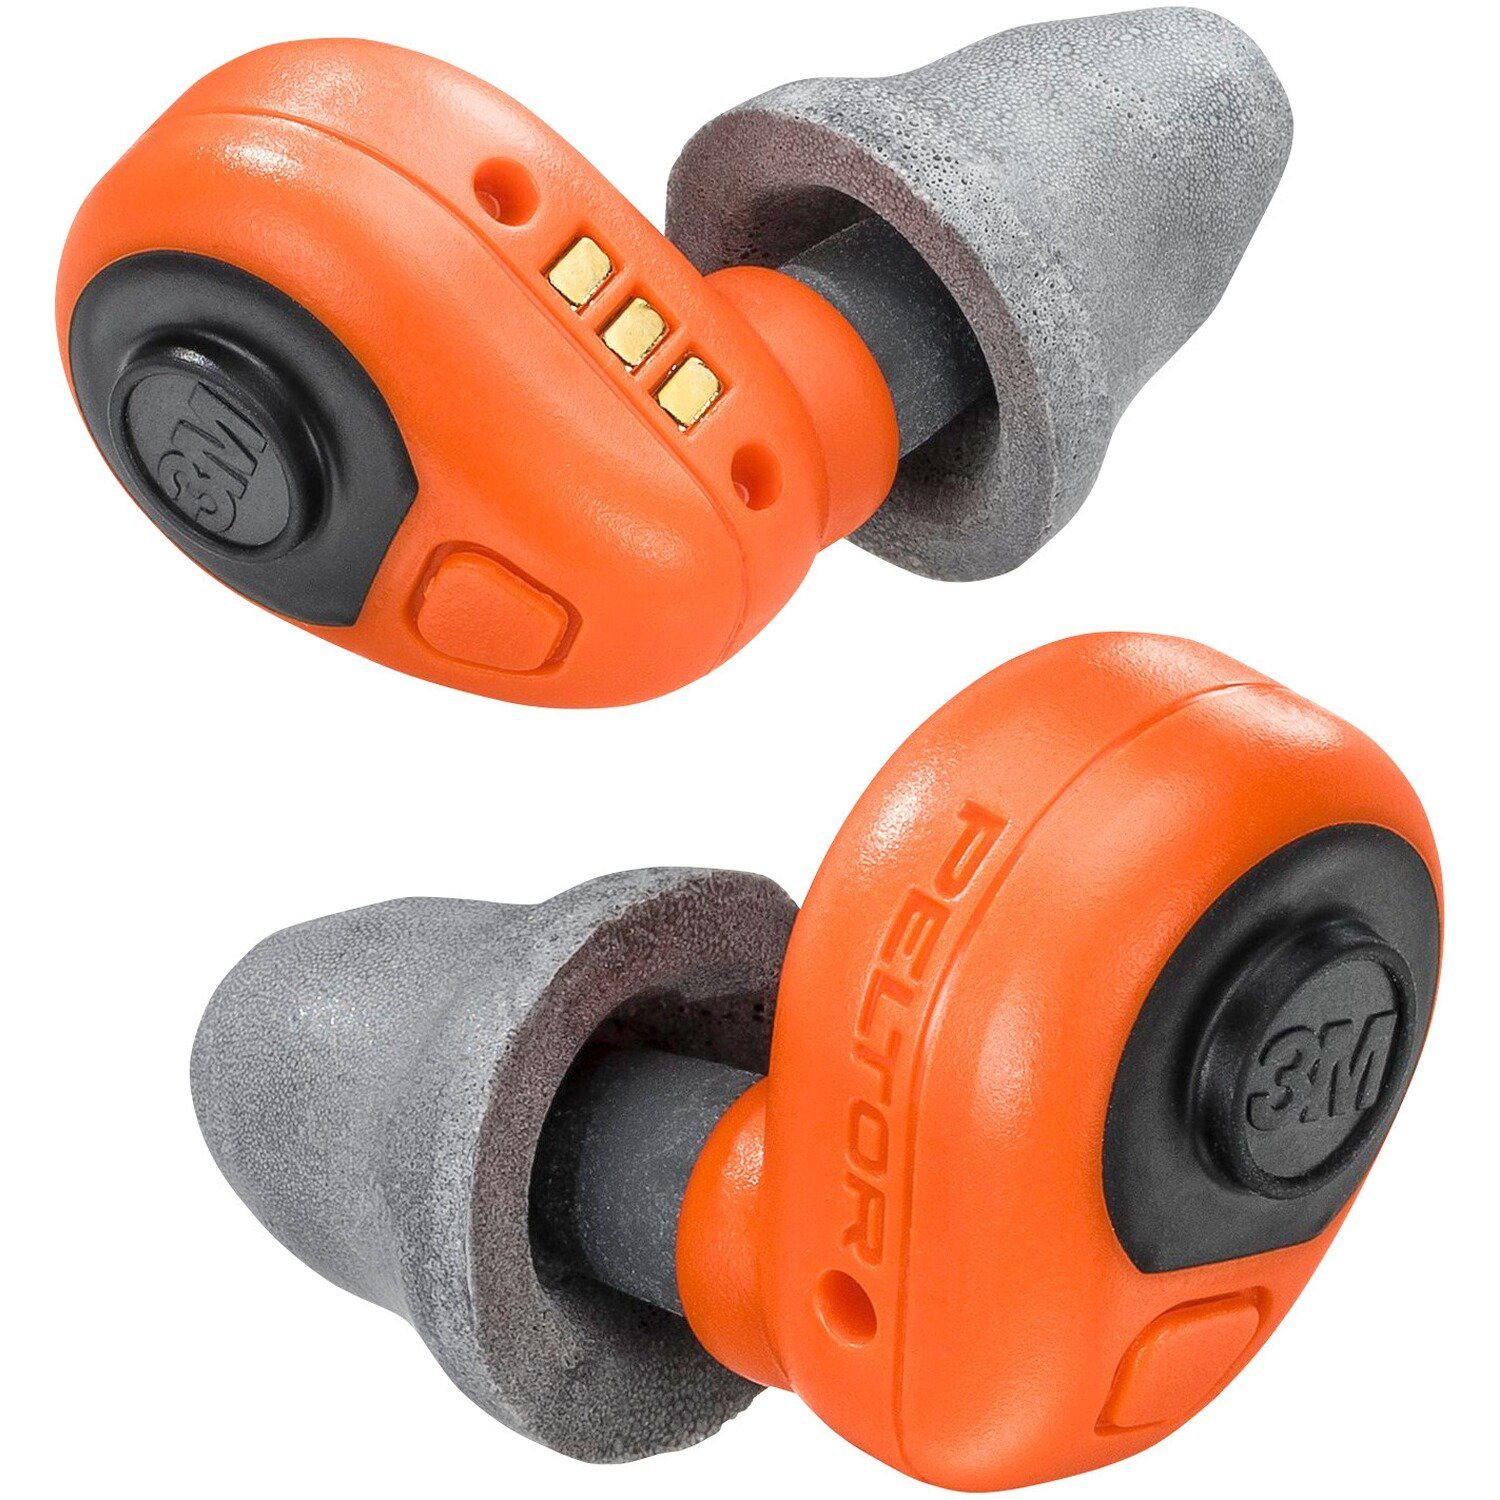 3M Gehörschutzstöpsel Gehörstöpsel LEP-200 EU OR Hunting elektronisch | Gehörschutz